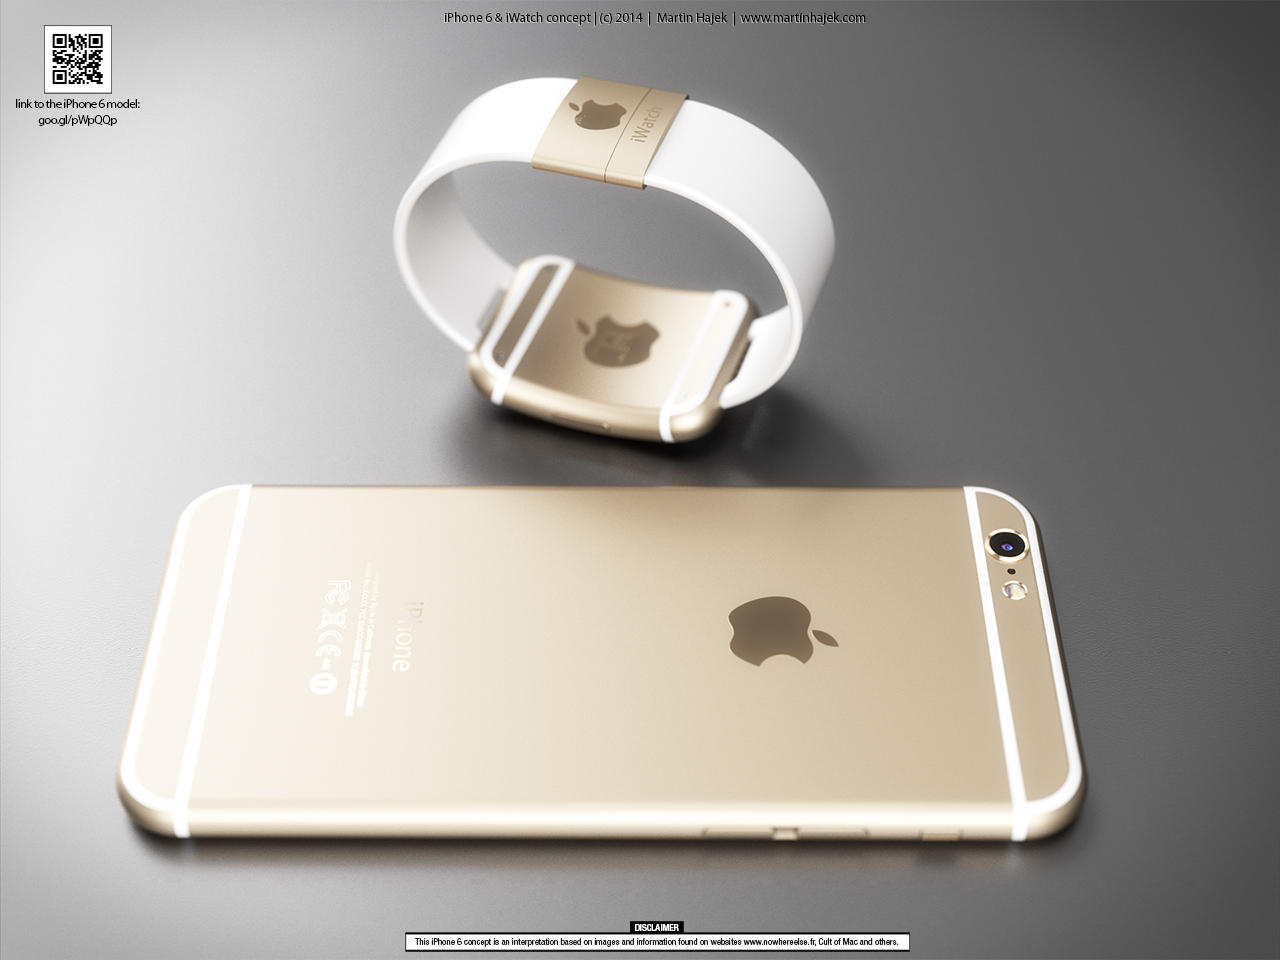 Apple Watch ตัวใหม่ แรงบันดาลใจจาก iPhone 6 (Concept)